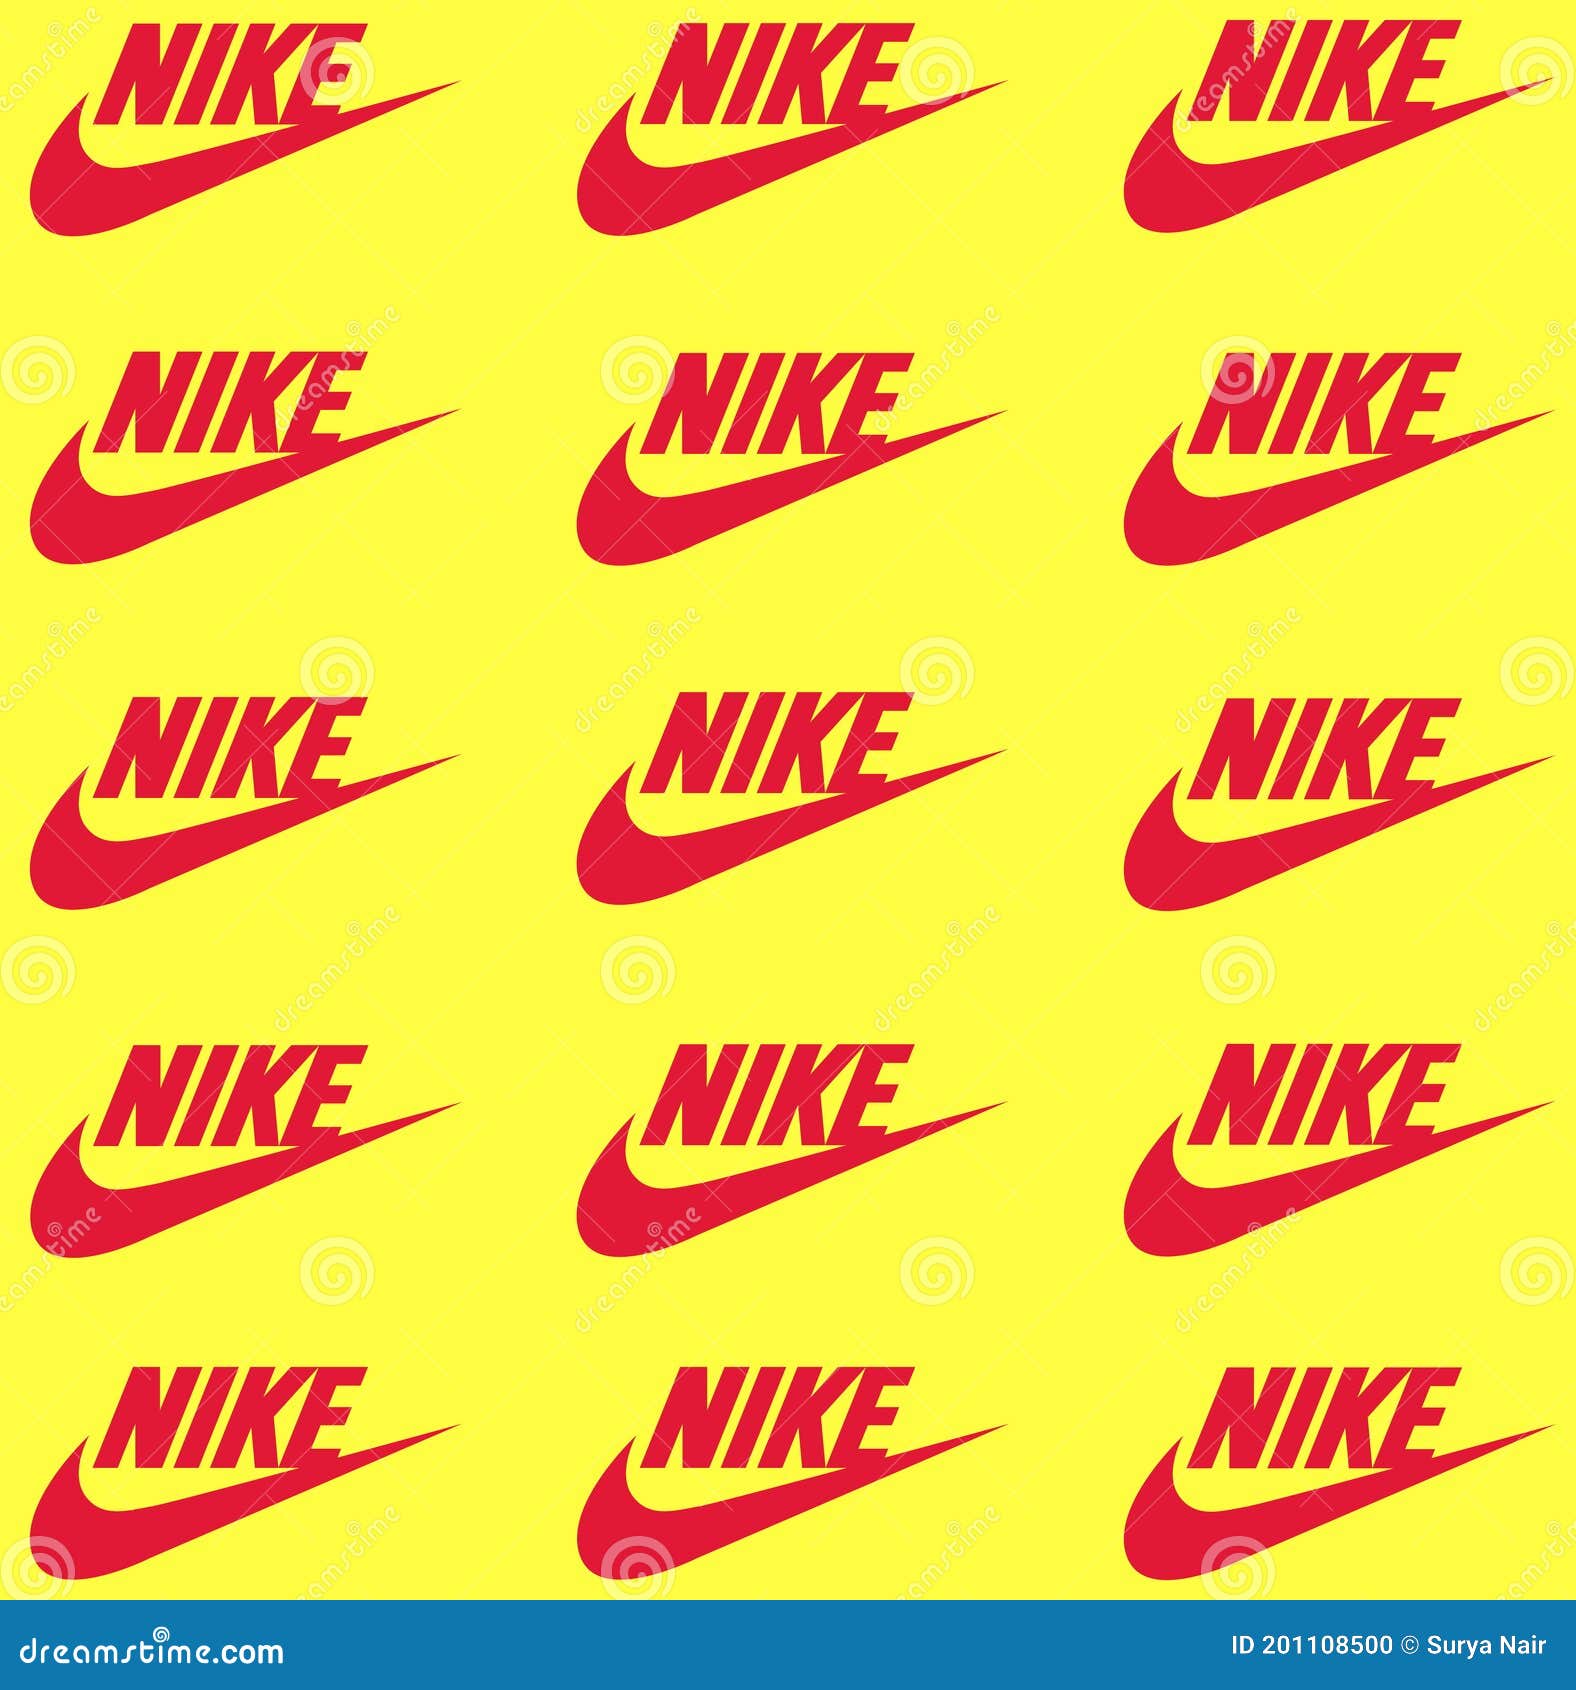 Nike Logo Printed on Yellow Nike, Inc Editorial Image - Image of long, emblem: